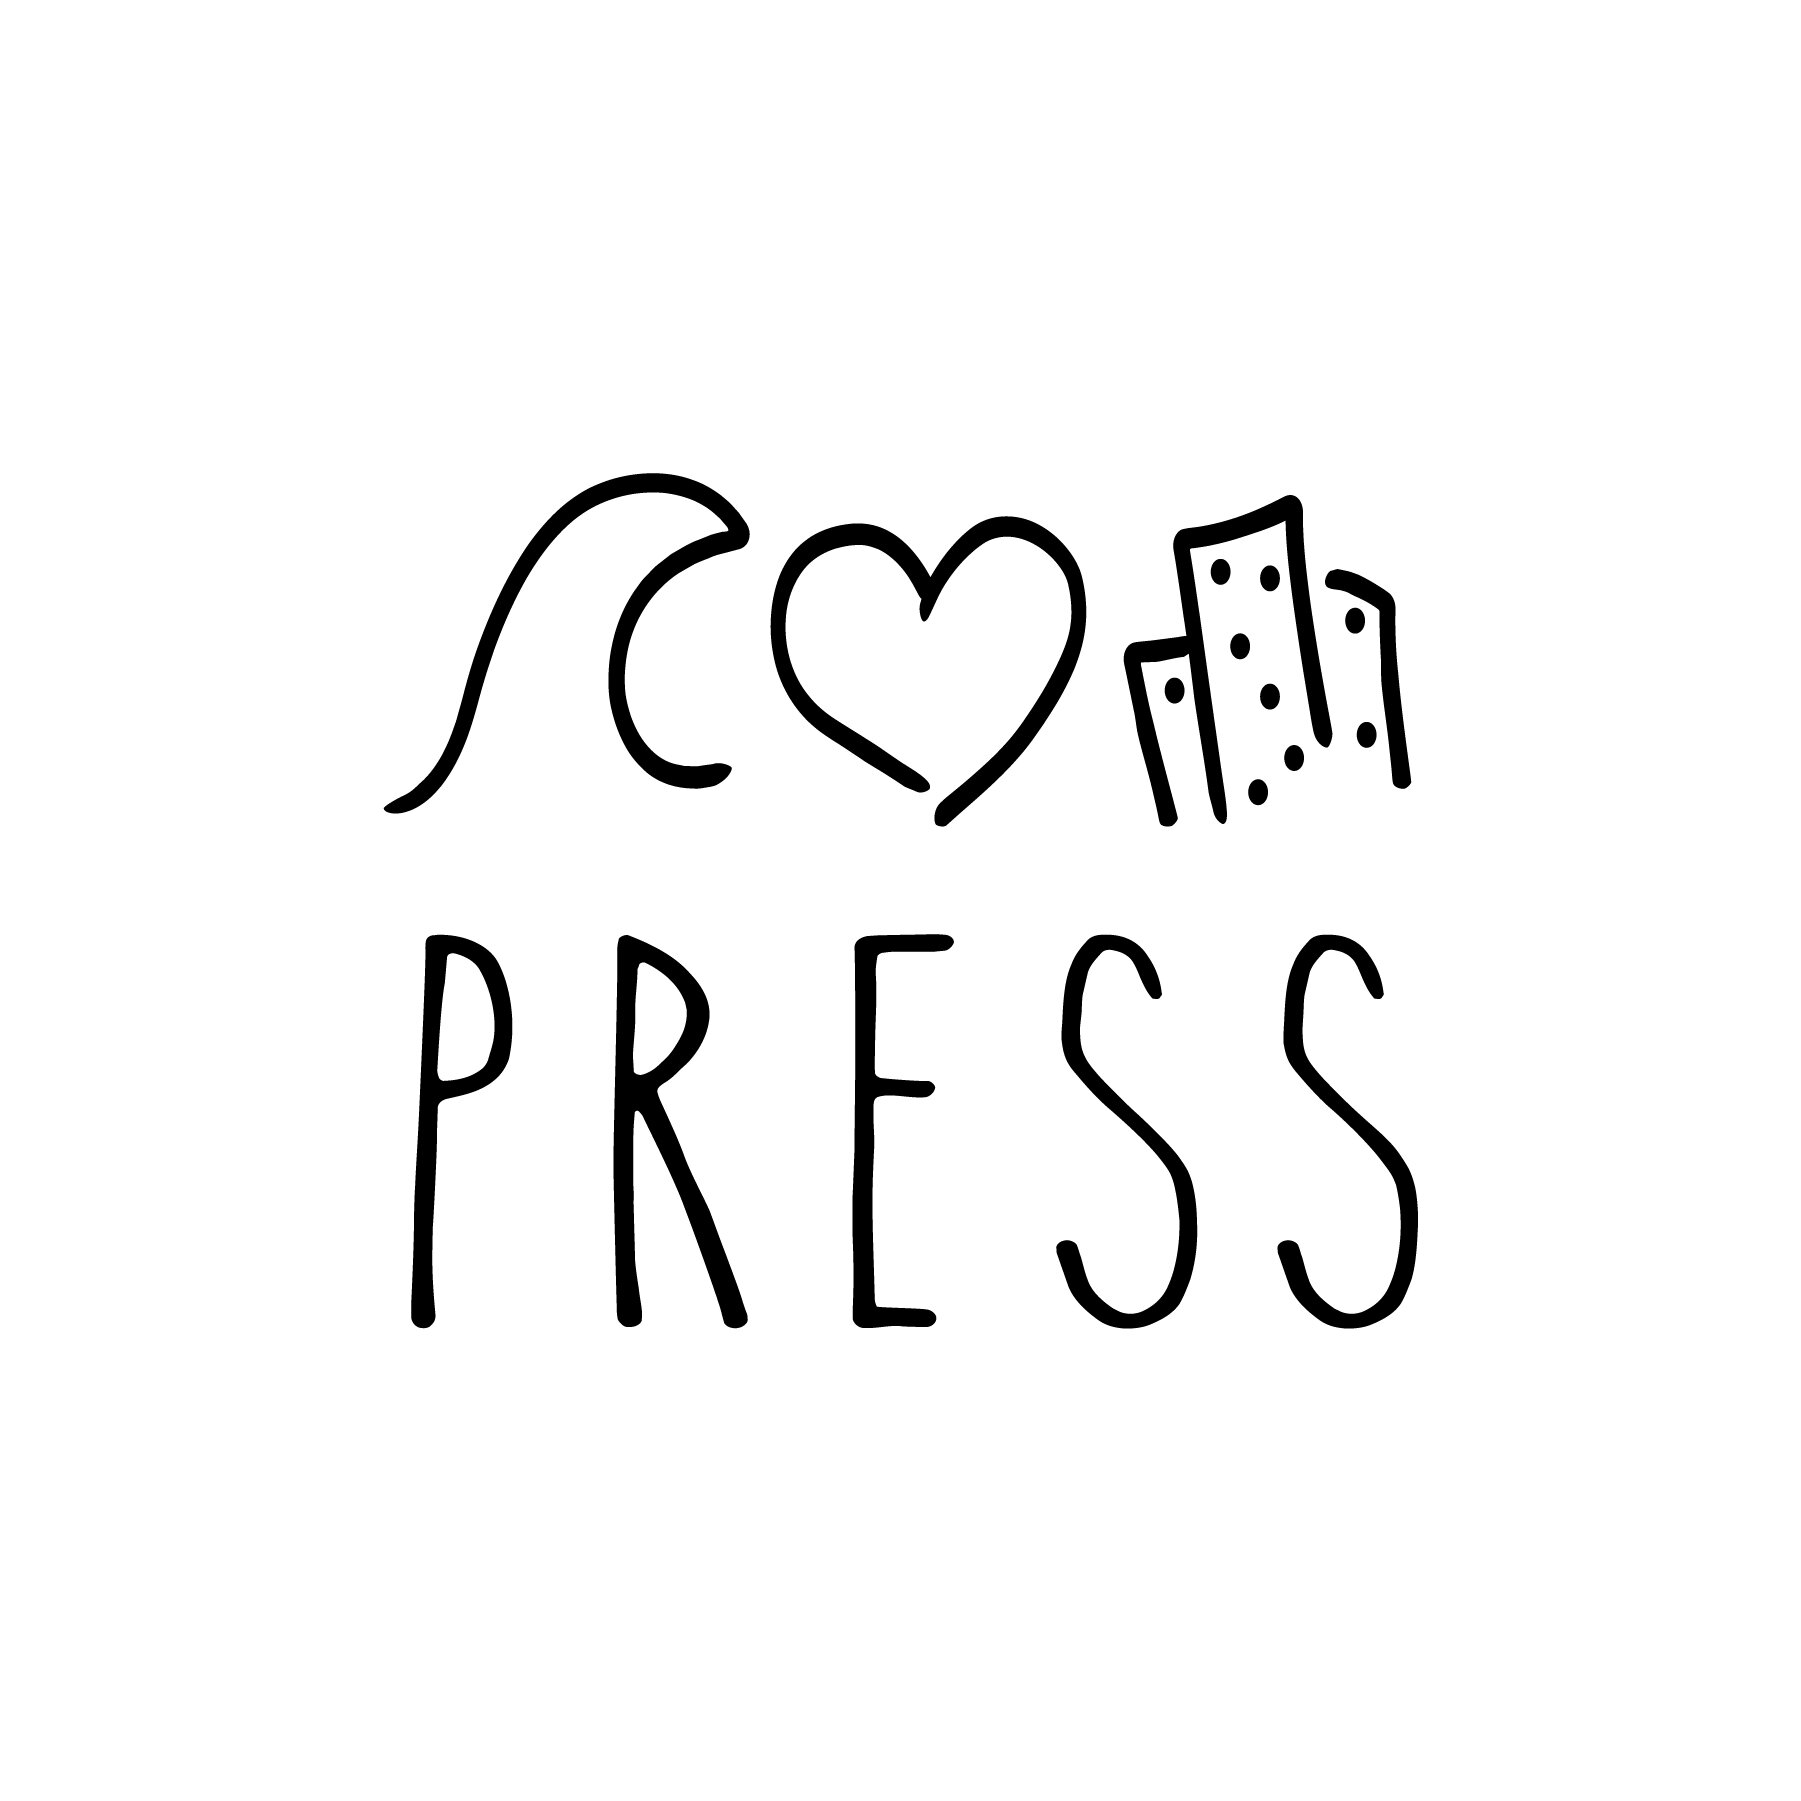 Sea Heart City Press